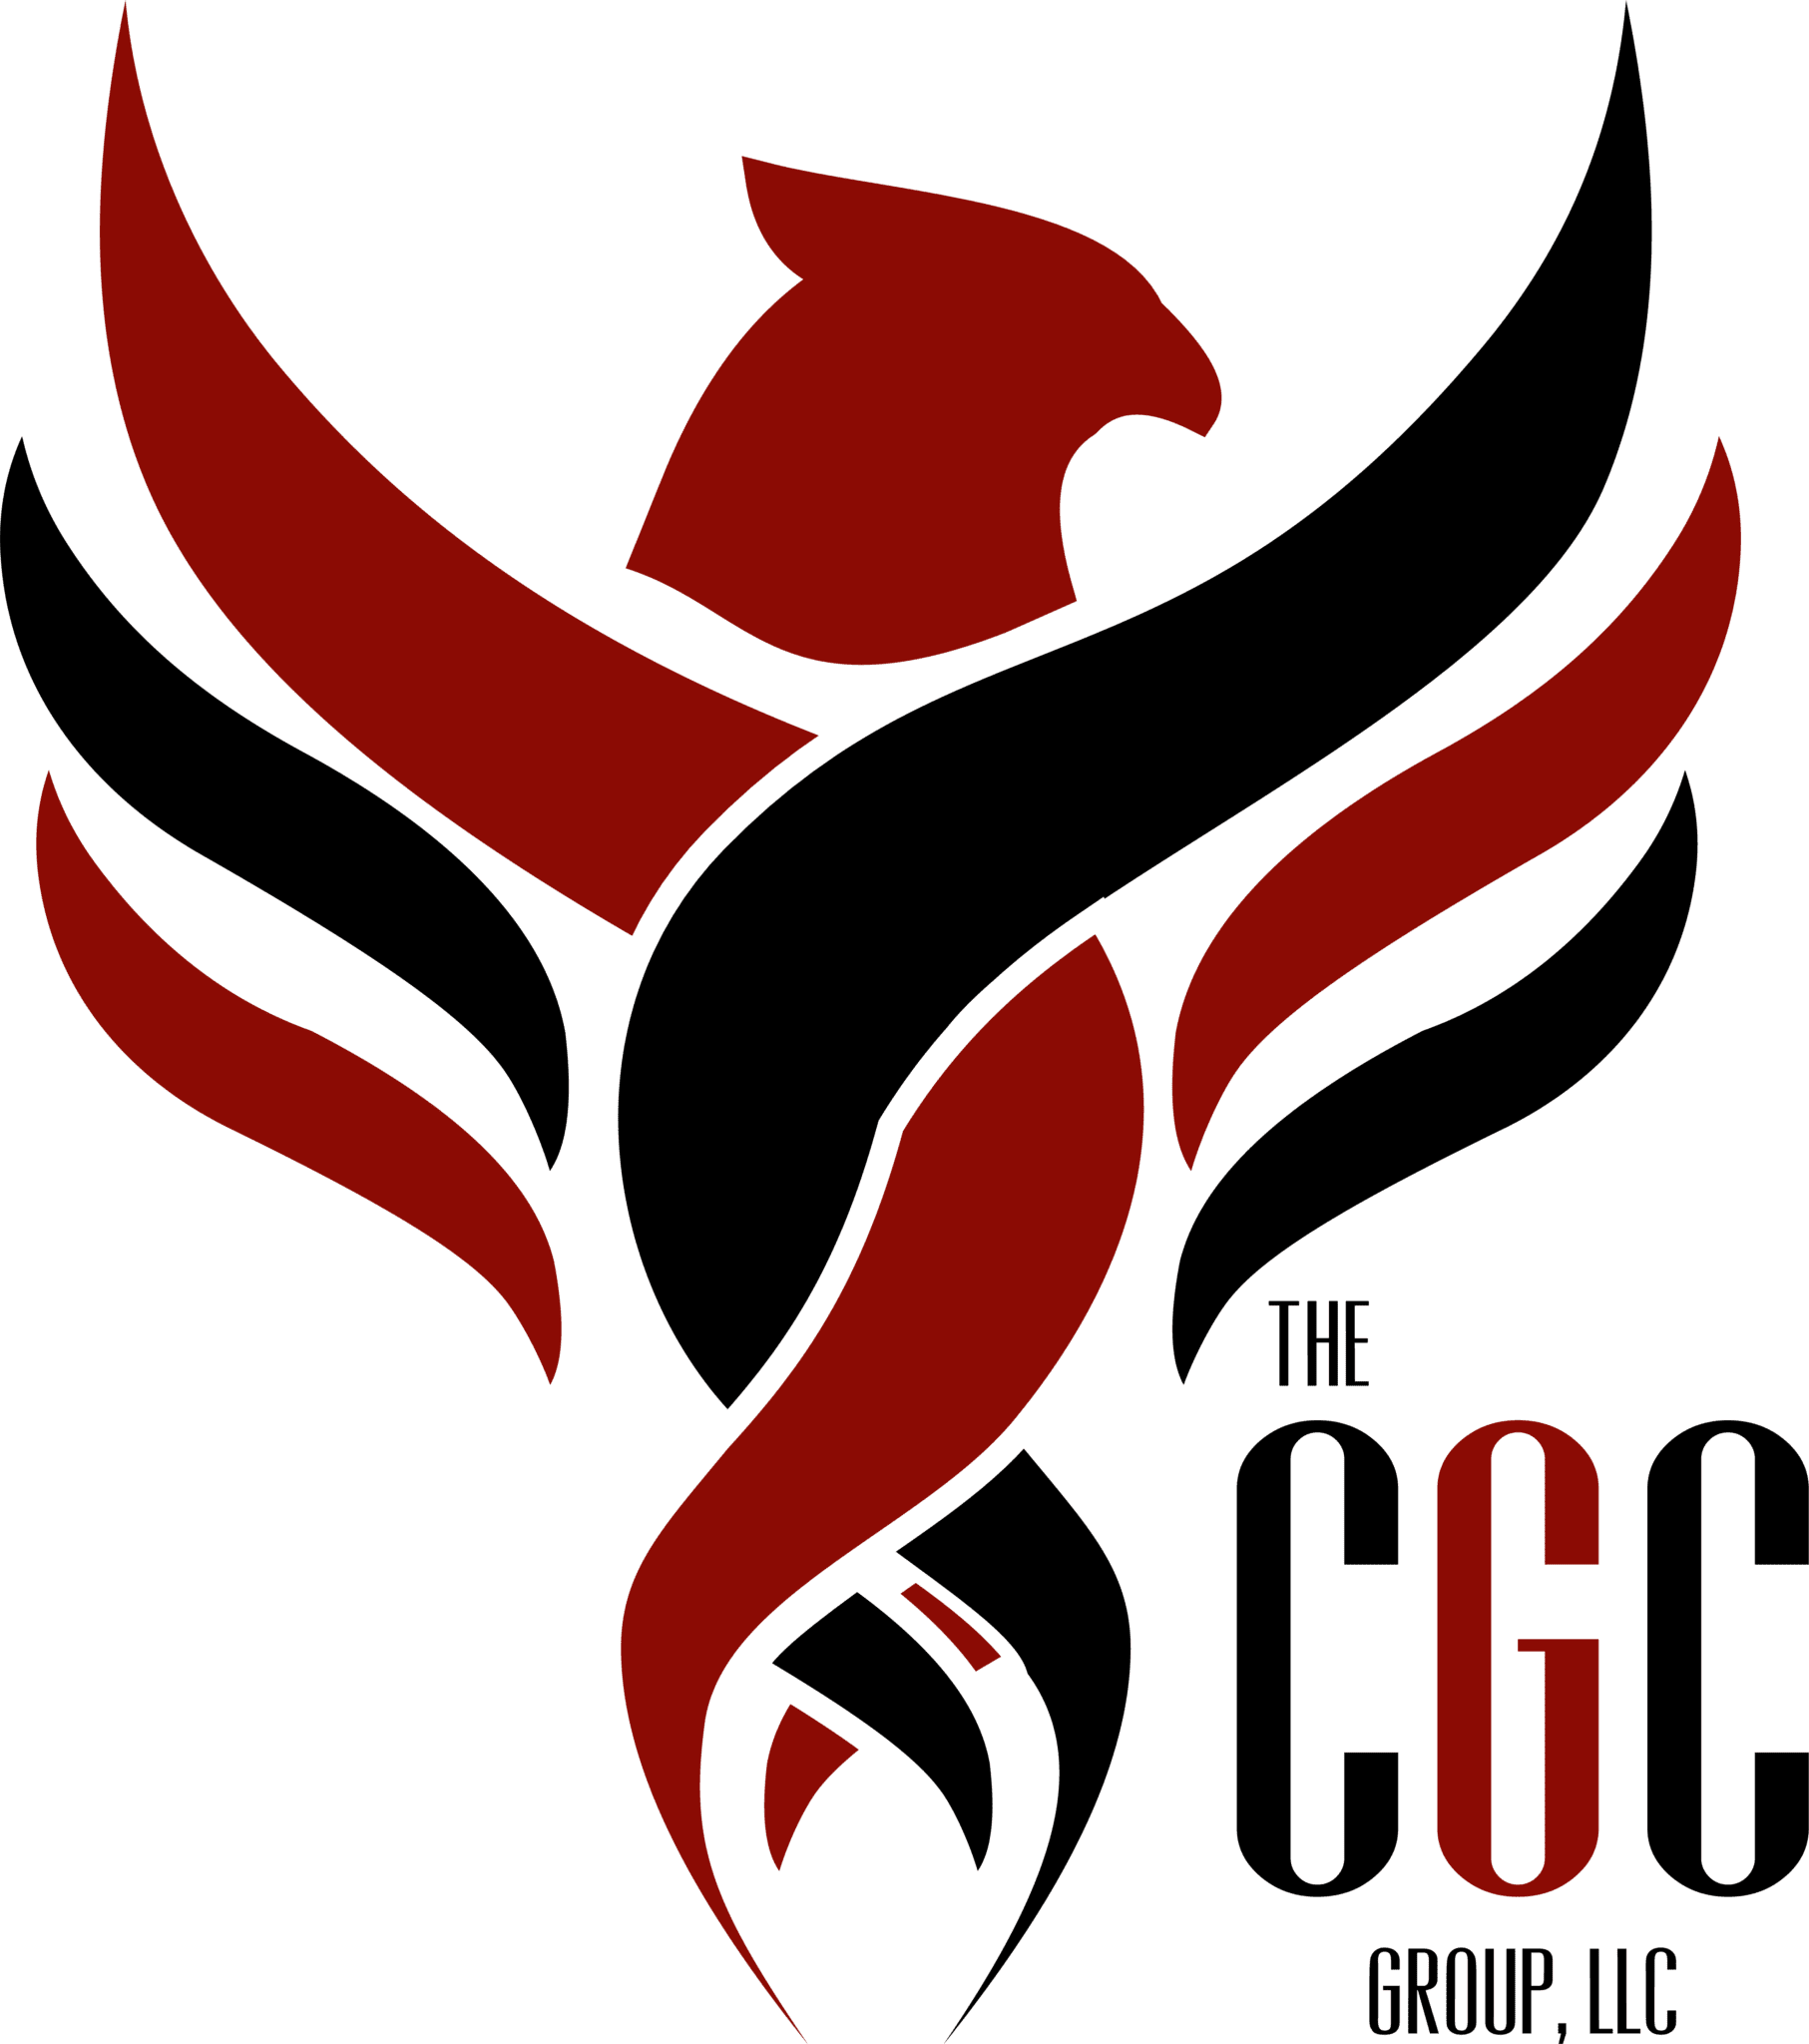 The CGC Group